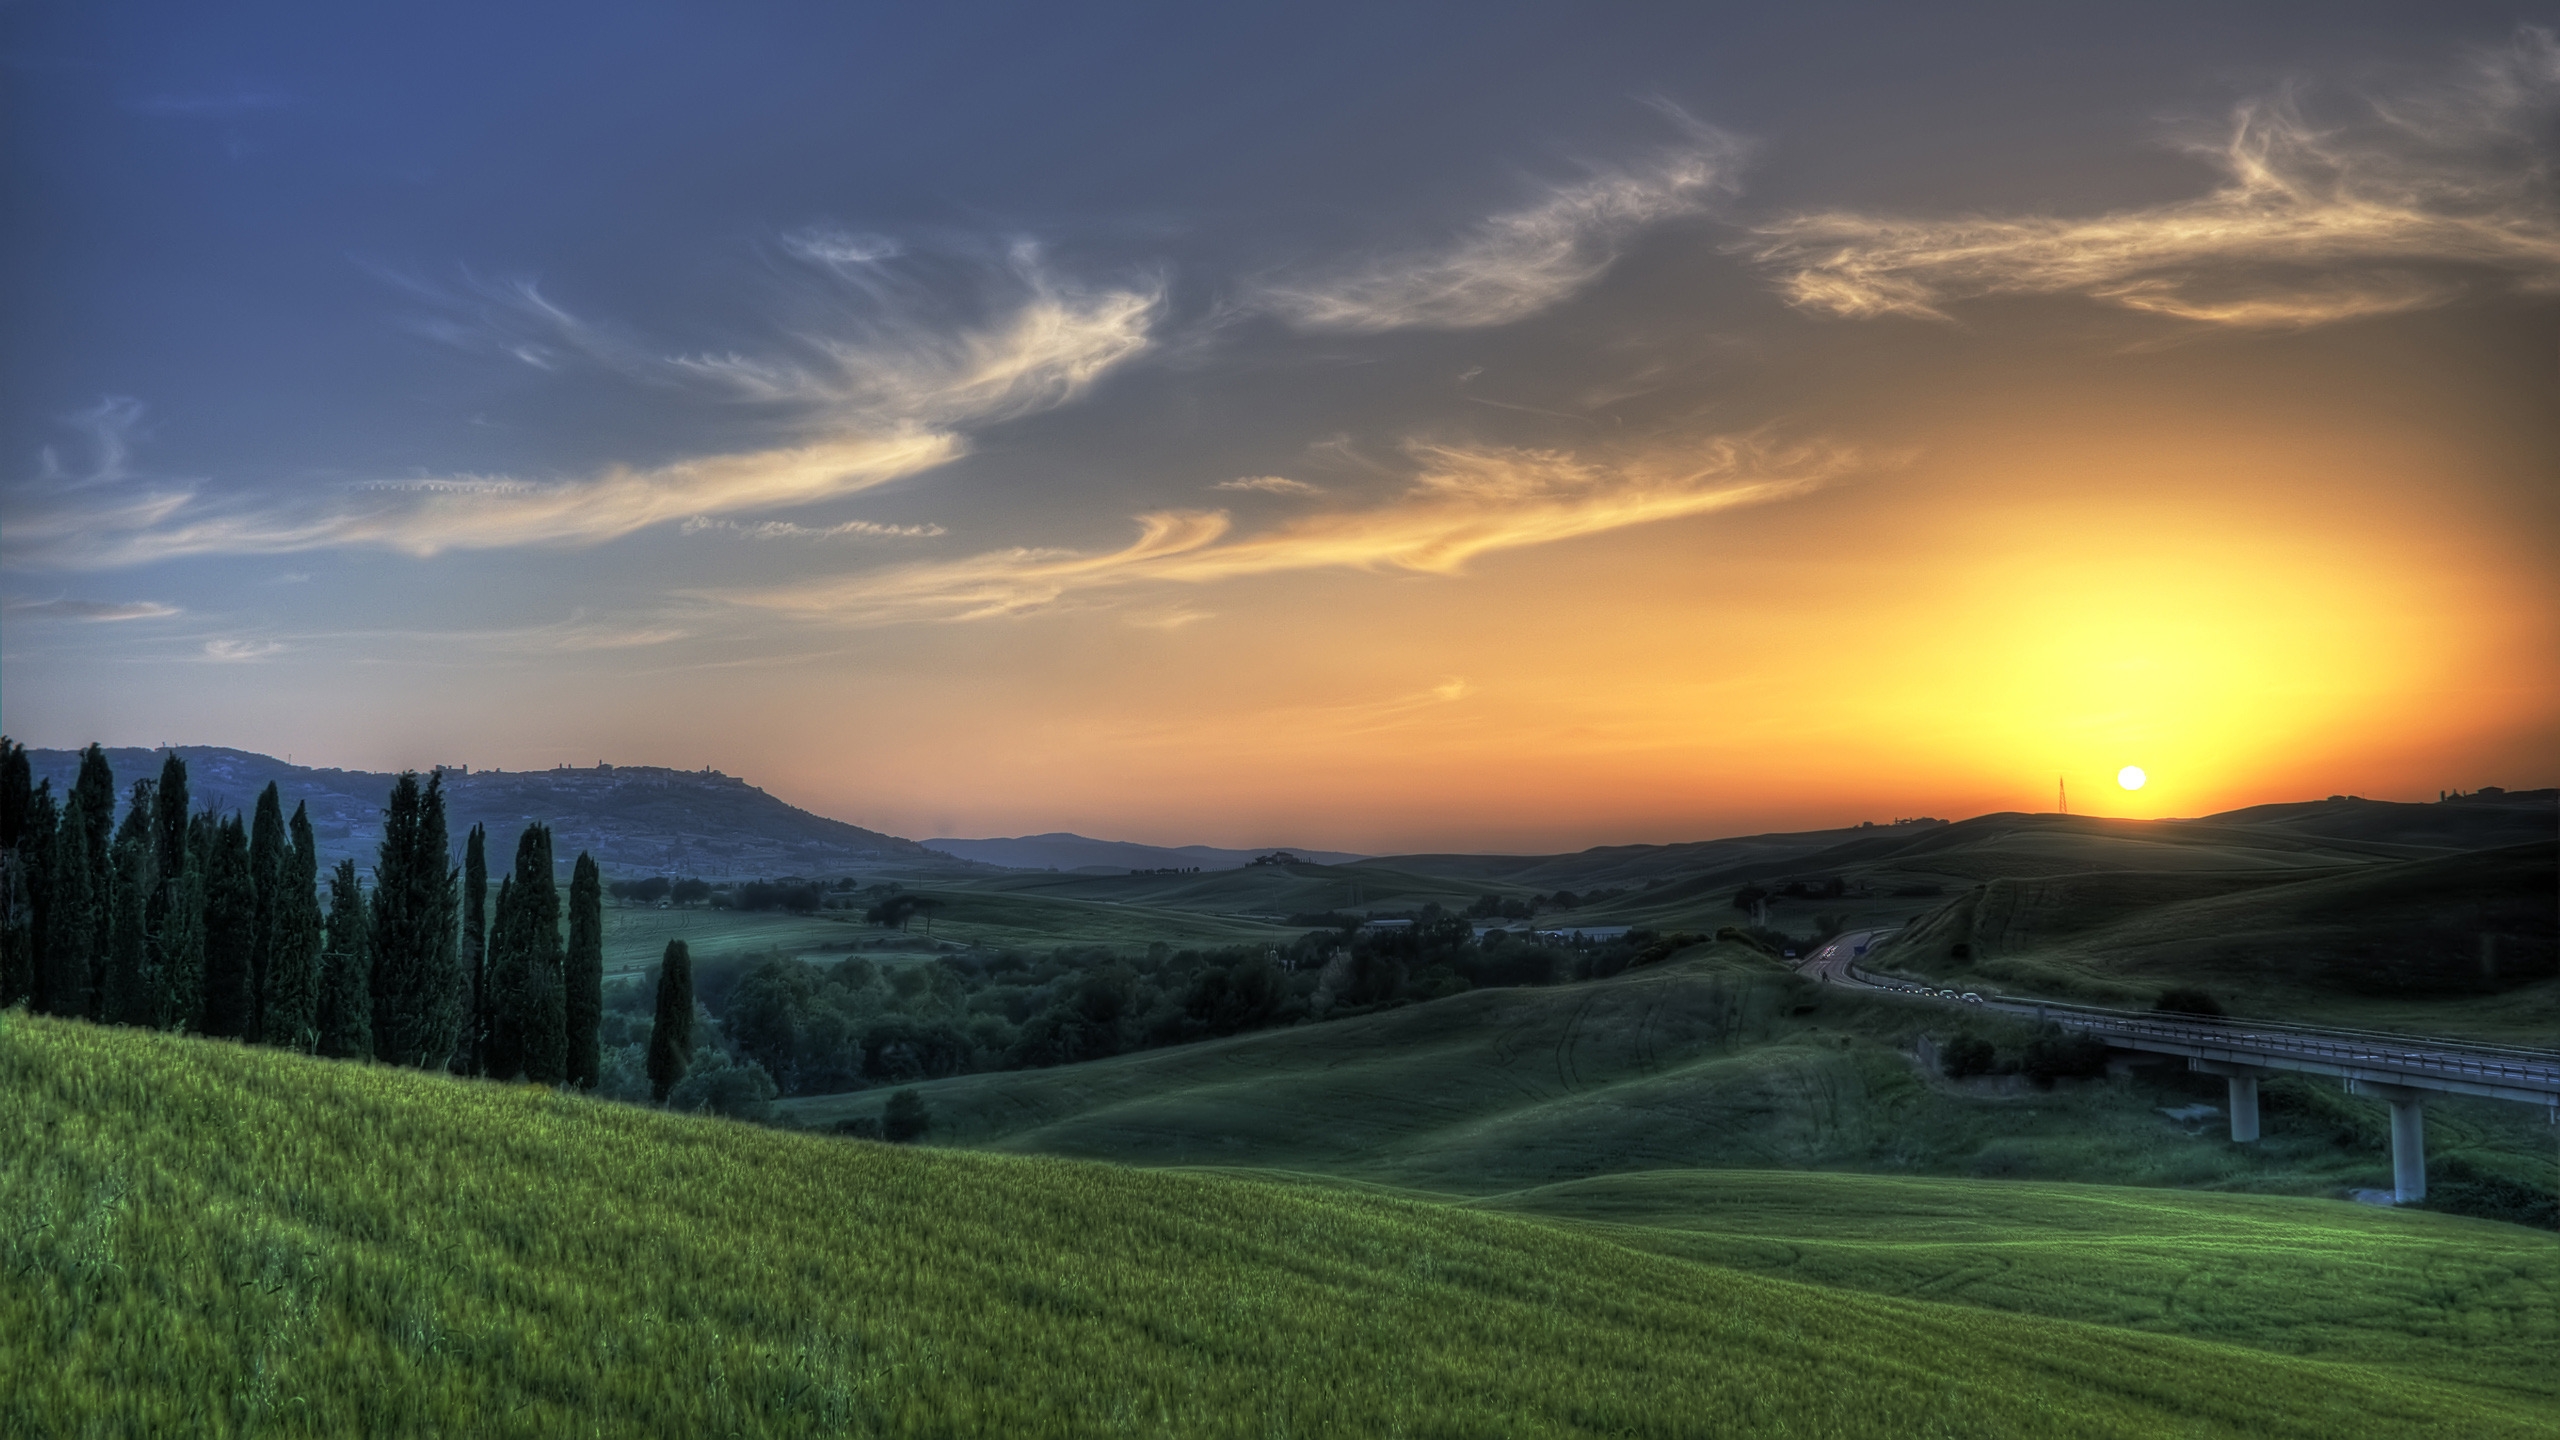 Tuscan Sunset for 2560x1440 HDTV resolution